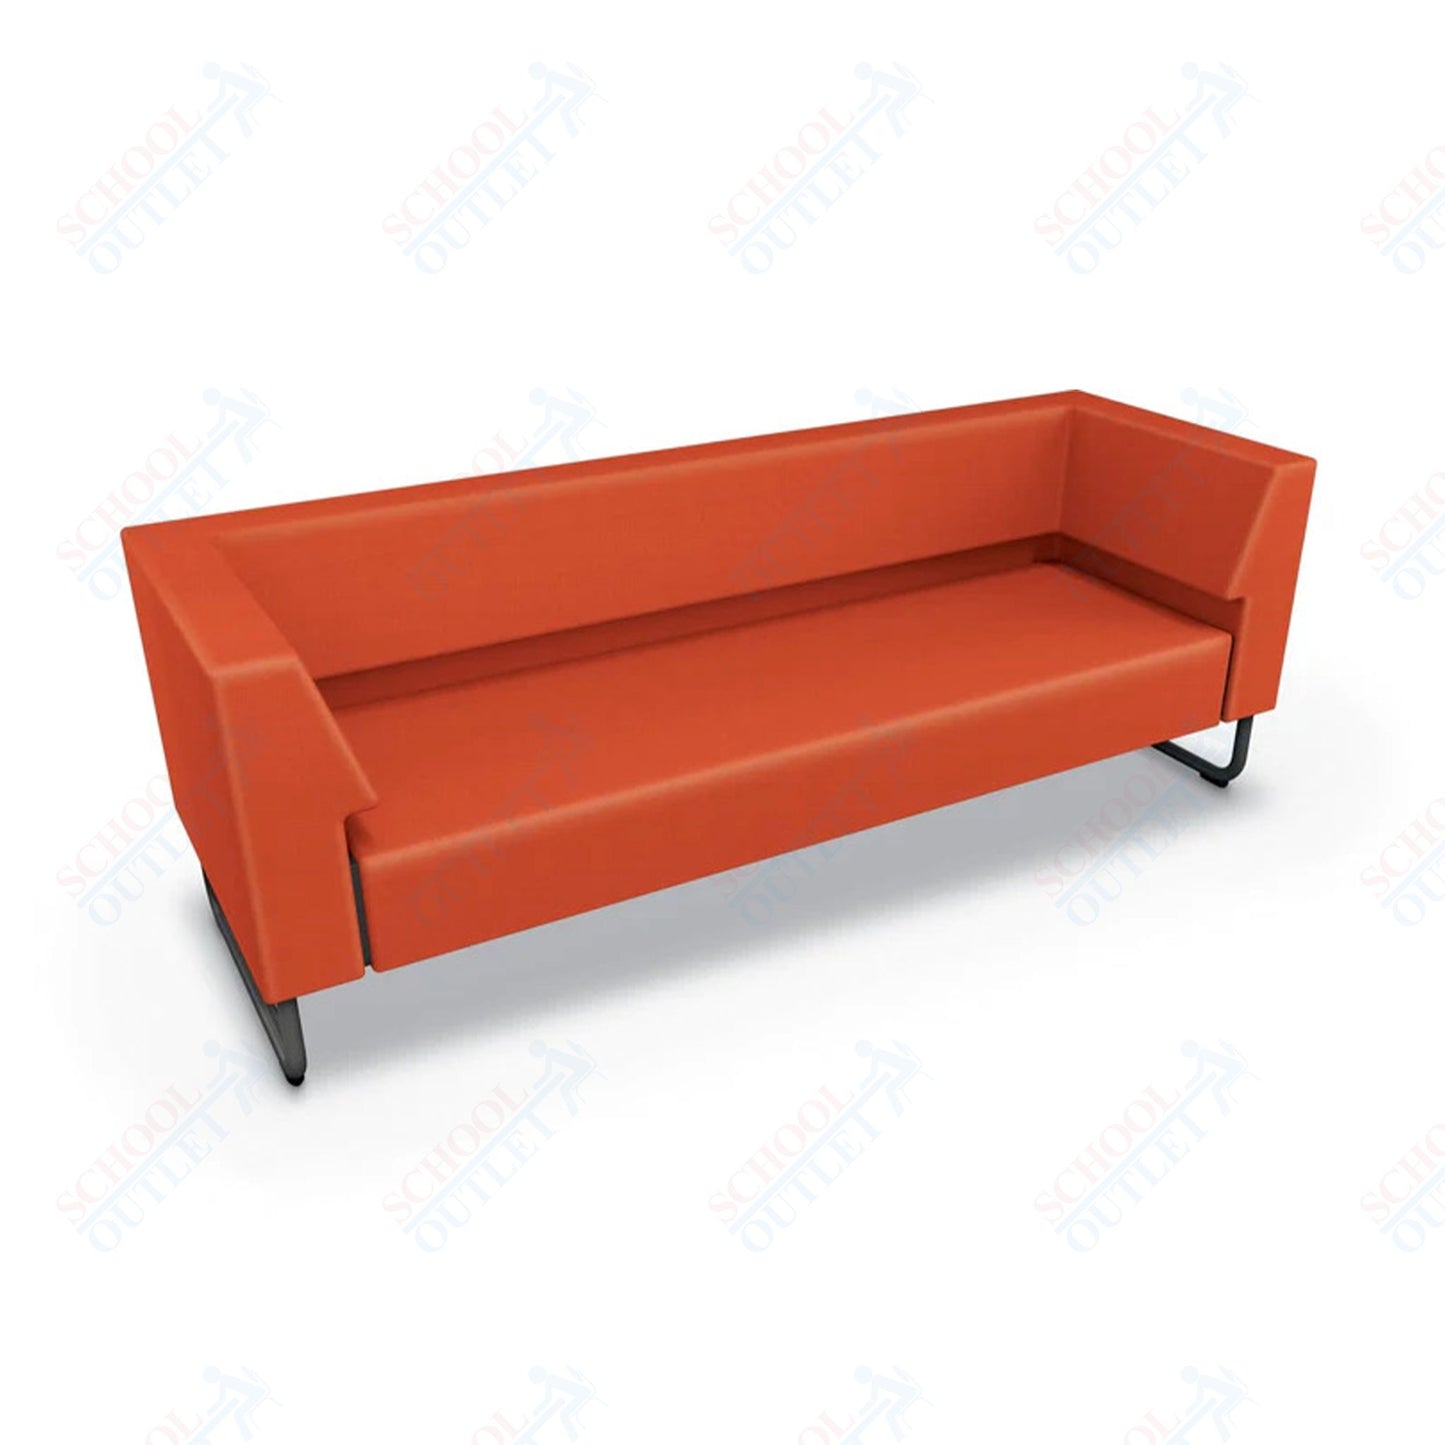 Mooreco Akt Soft Seating Lounge Sofa - Armless - Grade 02 Fabric and Powder Coated Sled Legs